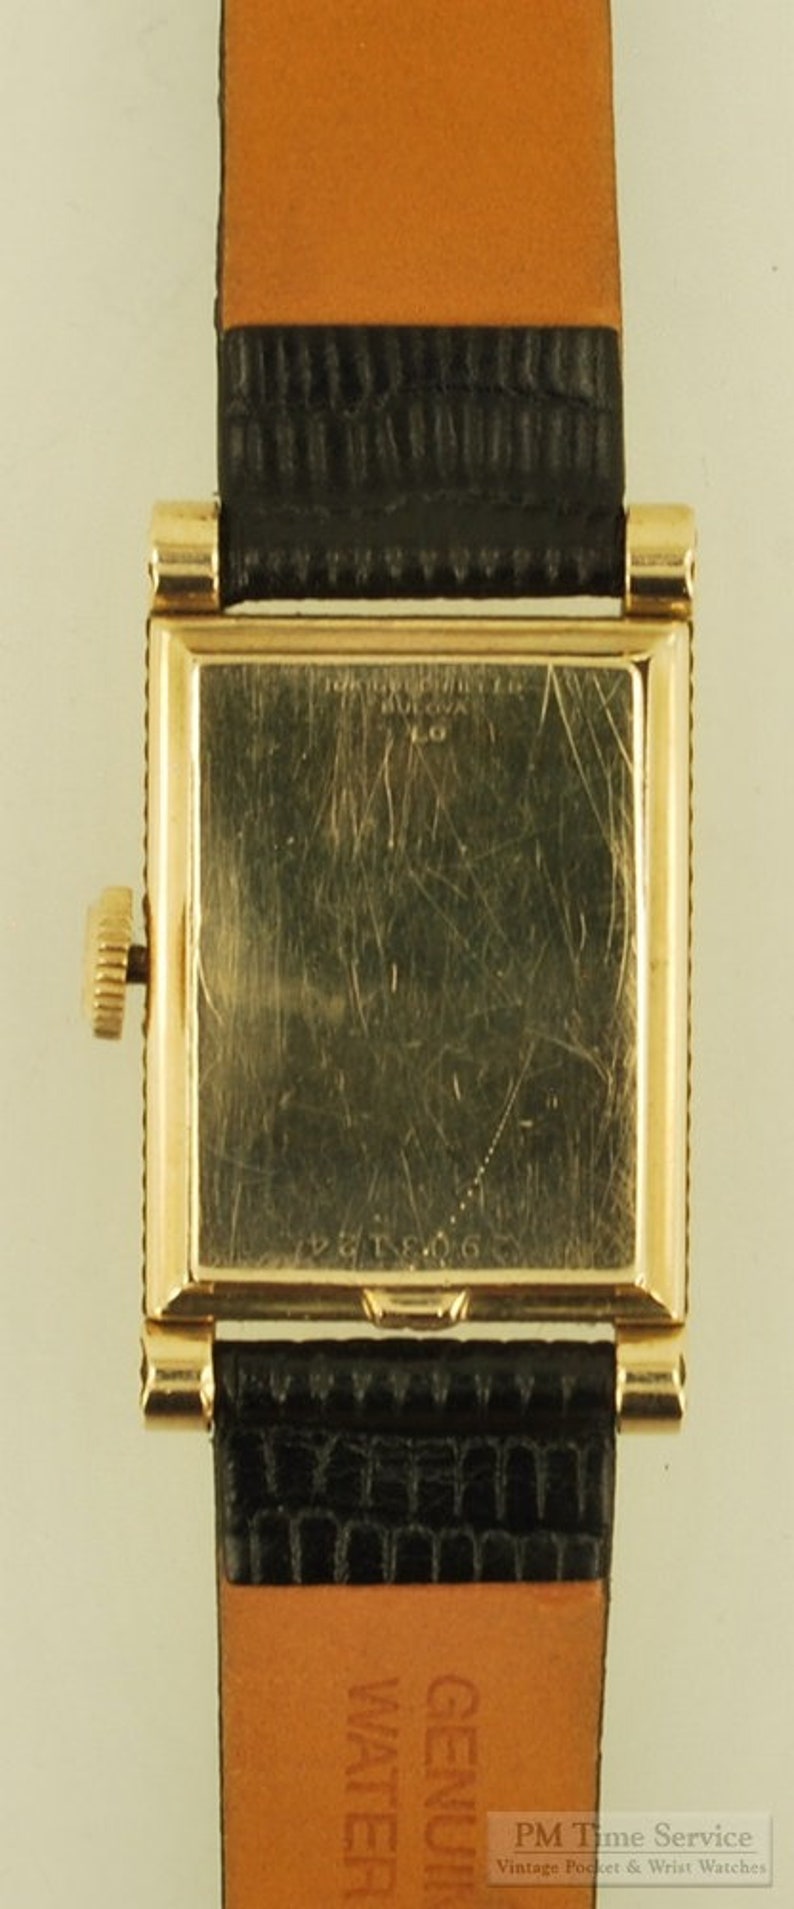 Bulova vintage grade 7AK 49 wrist watch, 21 jewels, distinctive yellow gold filled rectangular case with a scalloped design image 5